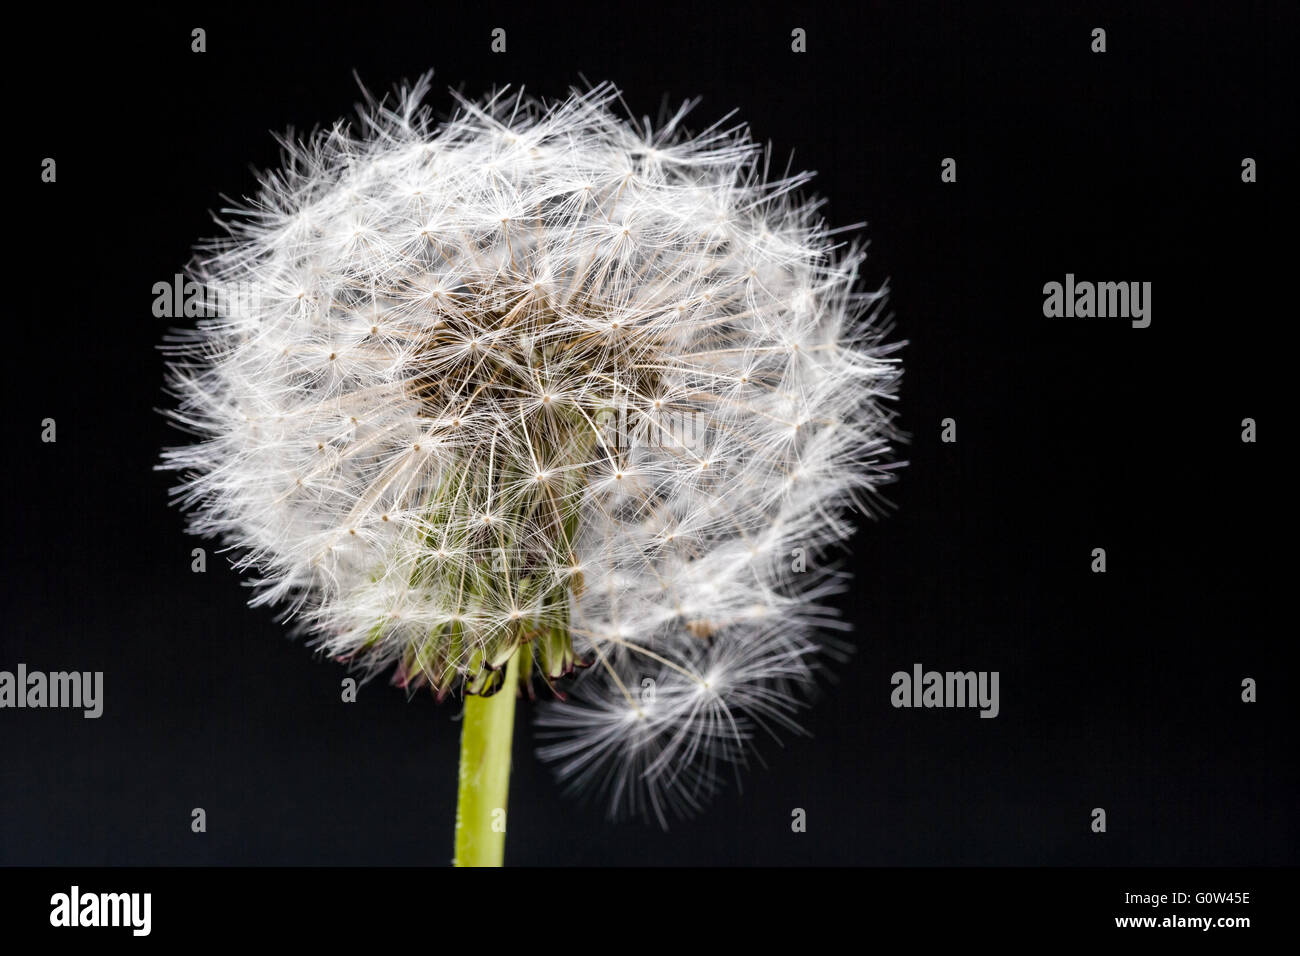 Dandelion Taraxacum officinale seed head taken against a black background in a studio Stock Photo